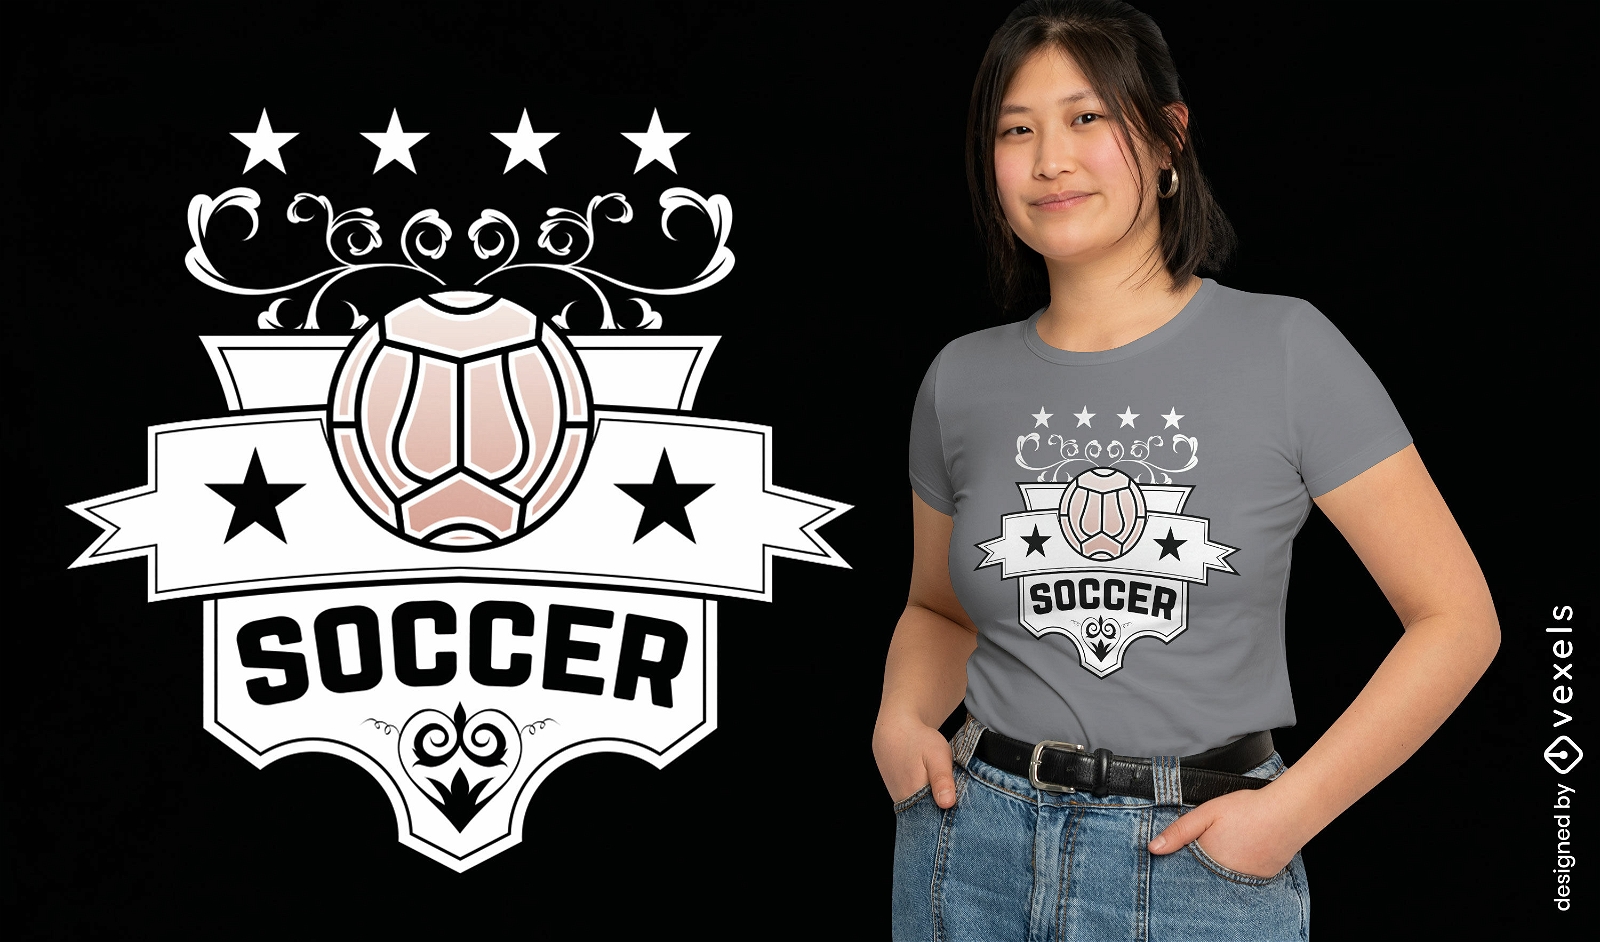 Soccer decorative badge t-shirt design